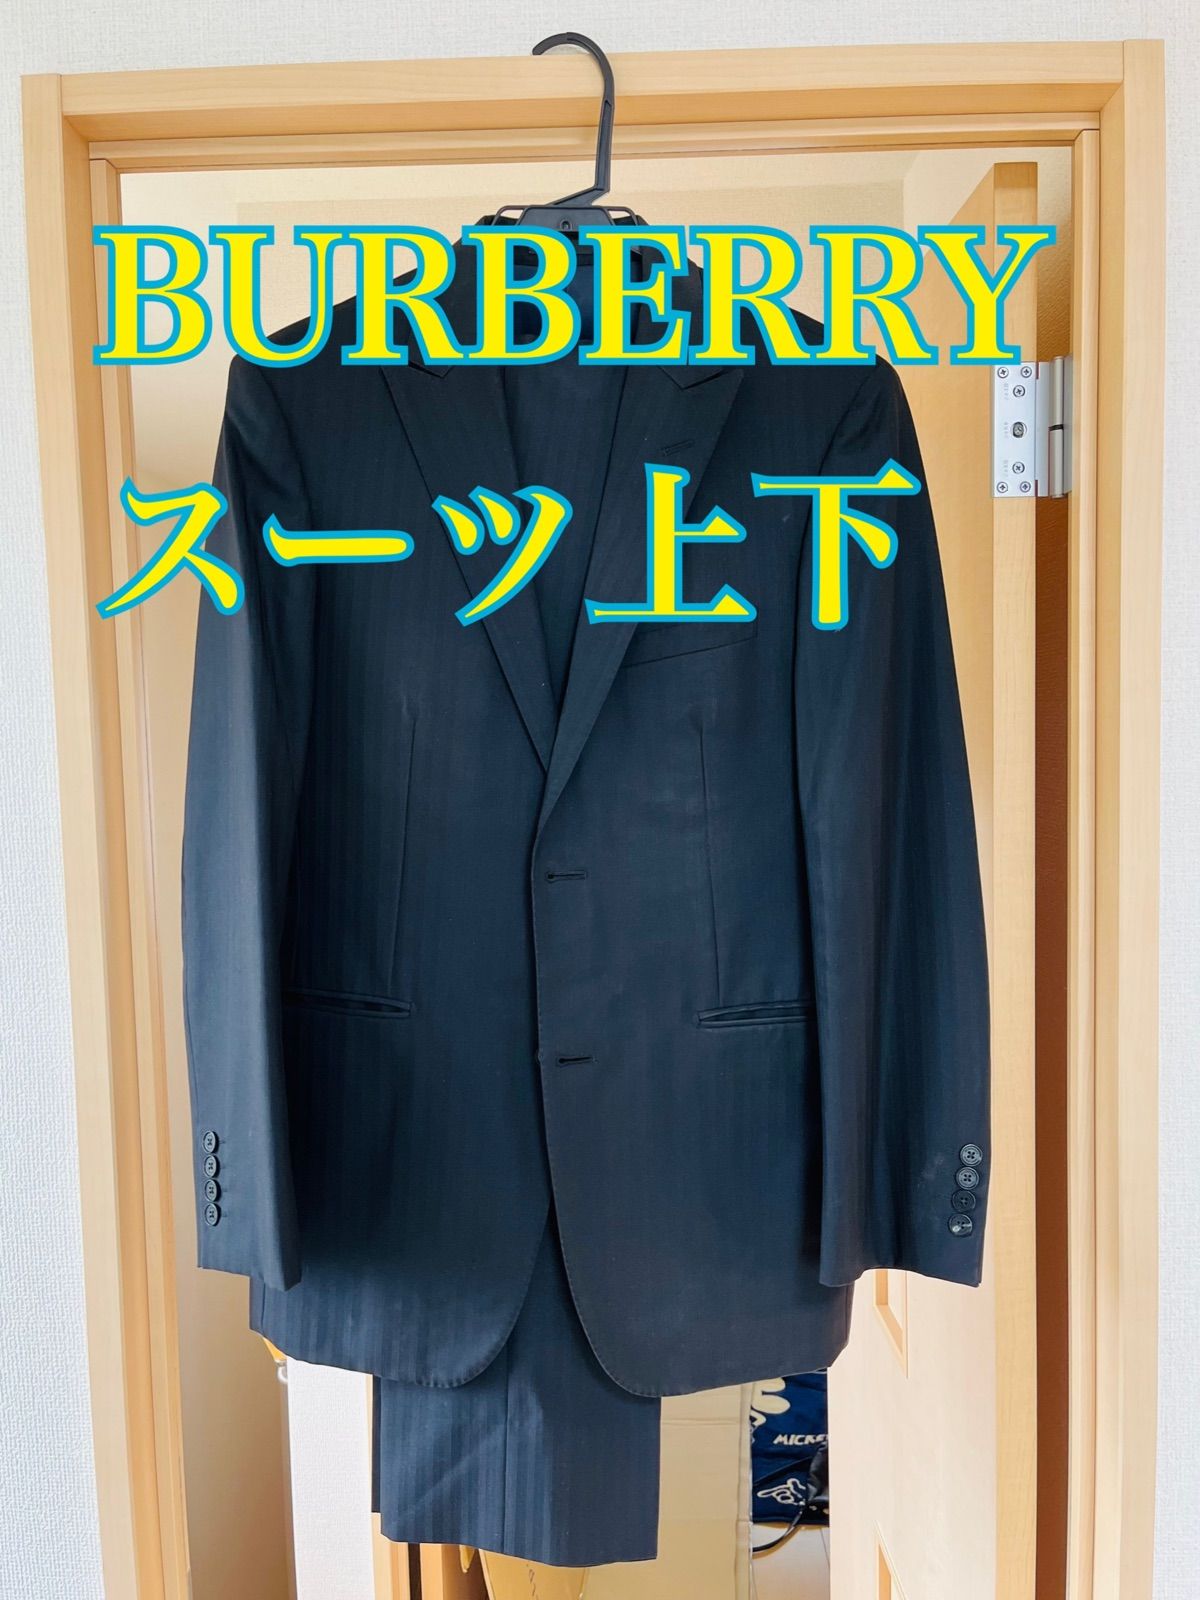 BURBERRY スーツ上下セット 黒 - 色々ショップ - メルカリ